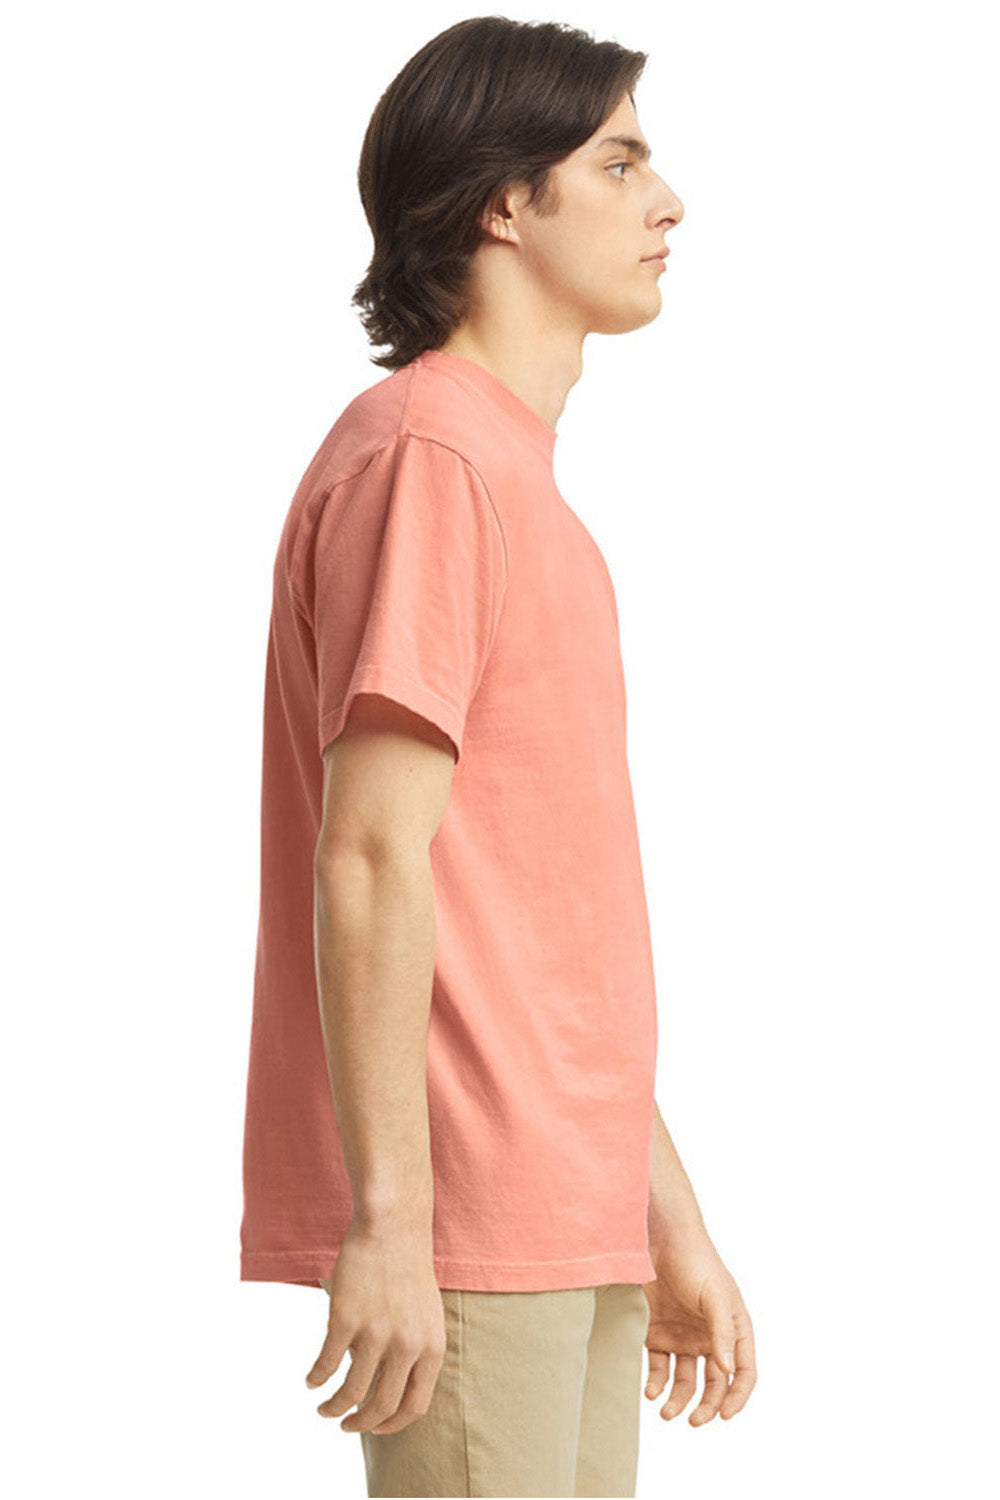 Comfort Colors 1717/C1717 Mens Short Sleeve Crewneck T-Shirt Peachy SIde